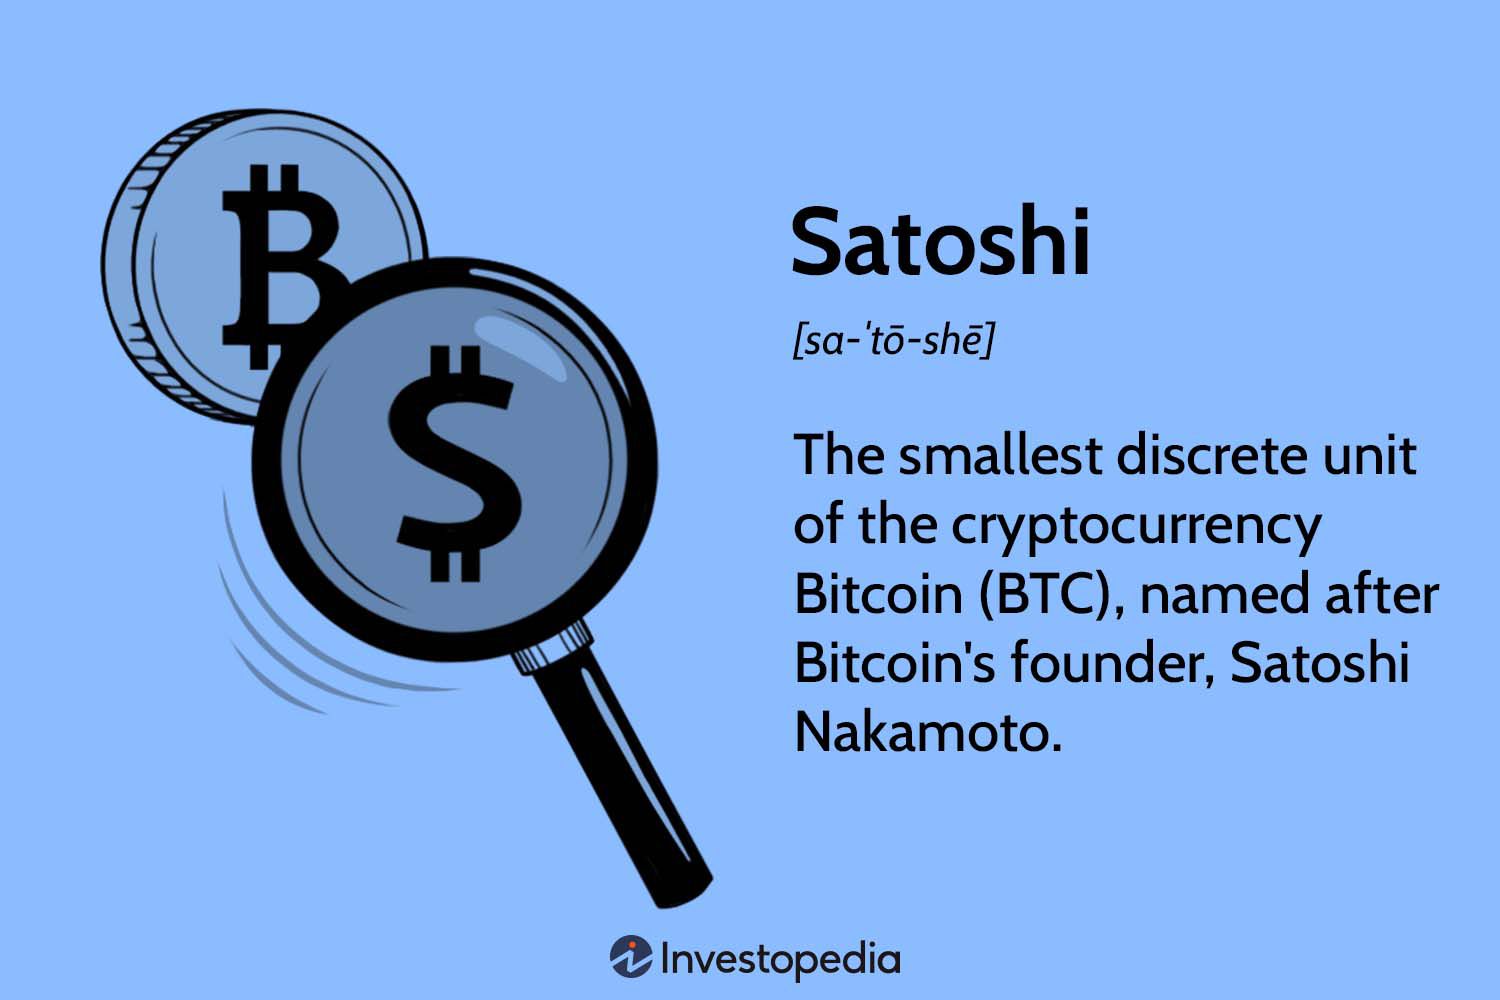 Convert Satoshi to EUR Euro and EUR to Satoshi